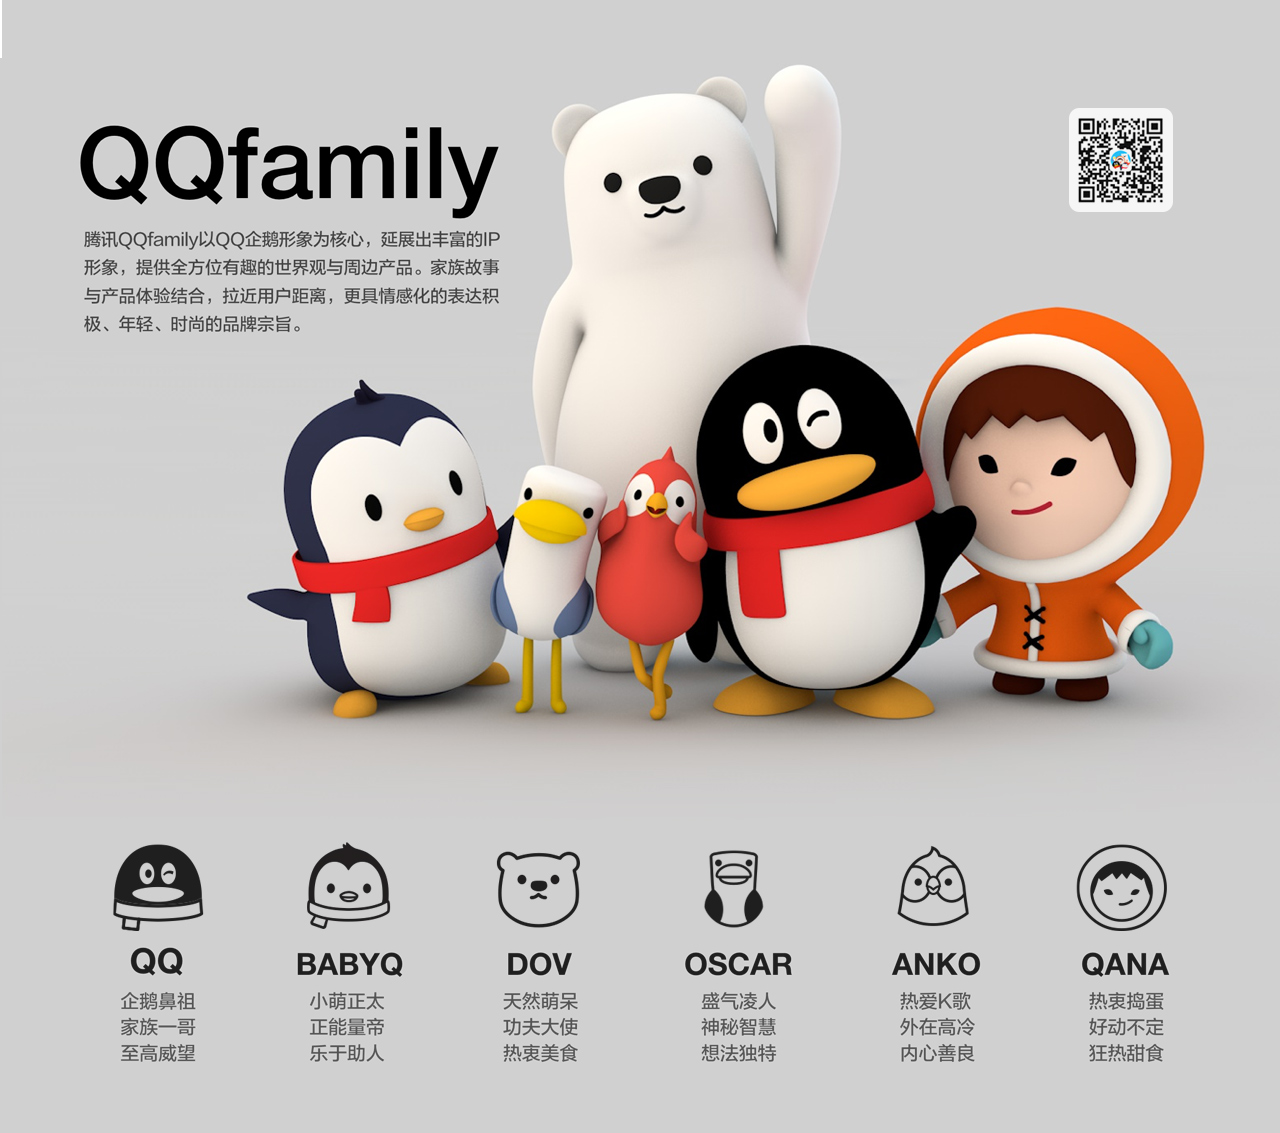 QQ 腾讯 企鹅 logo 形象